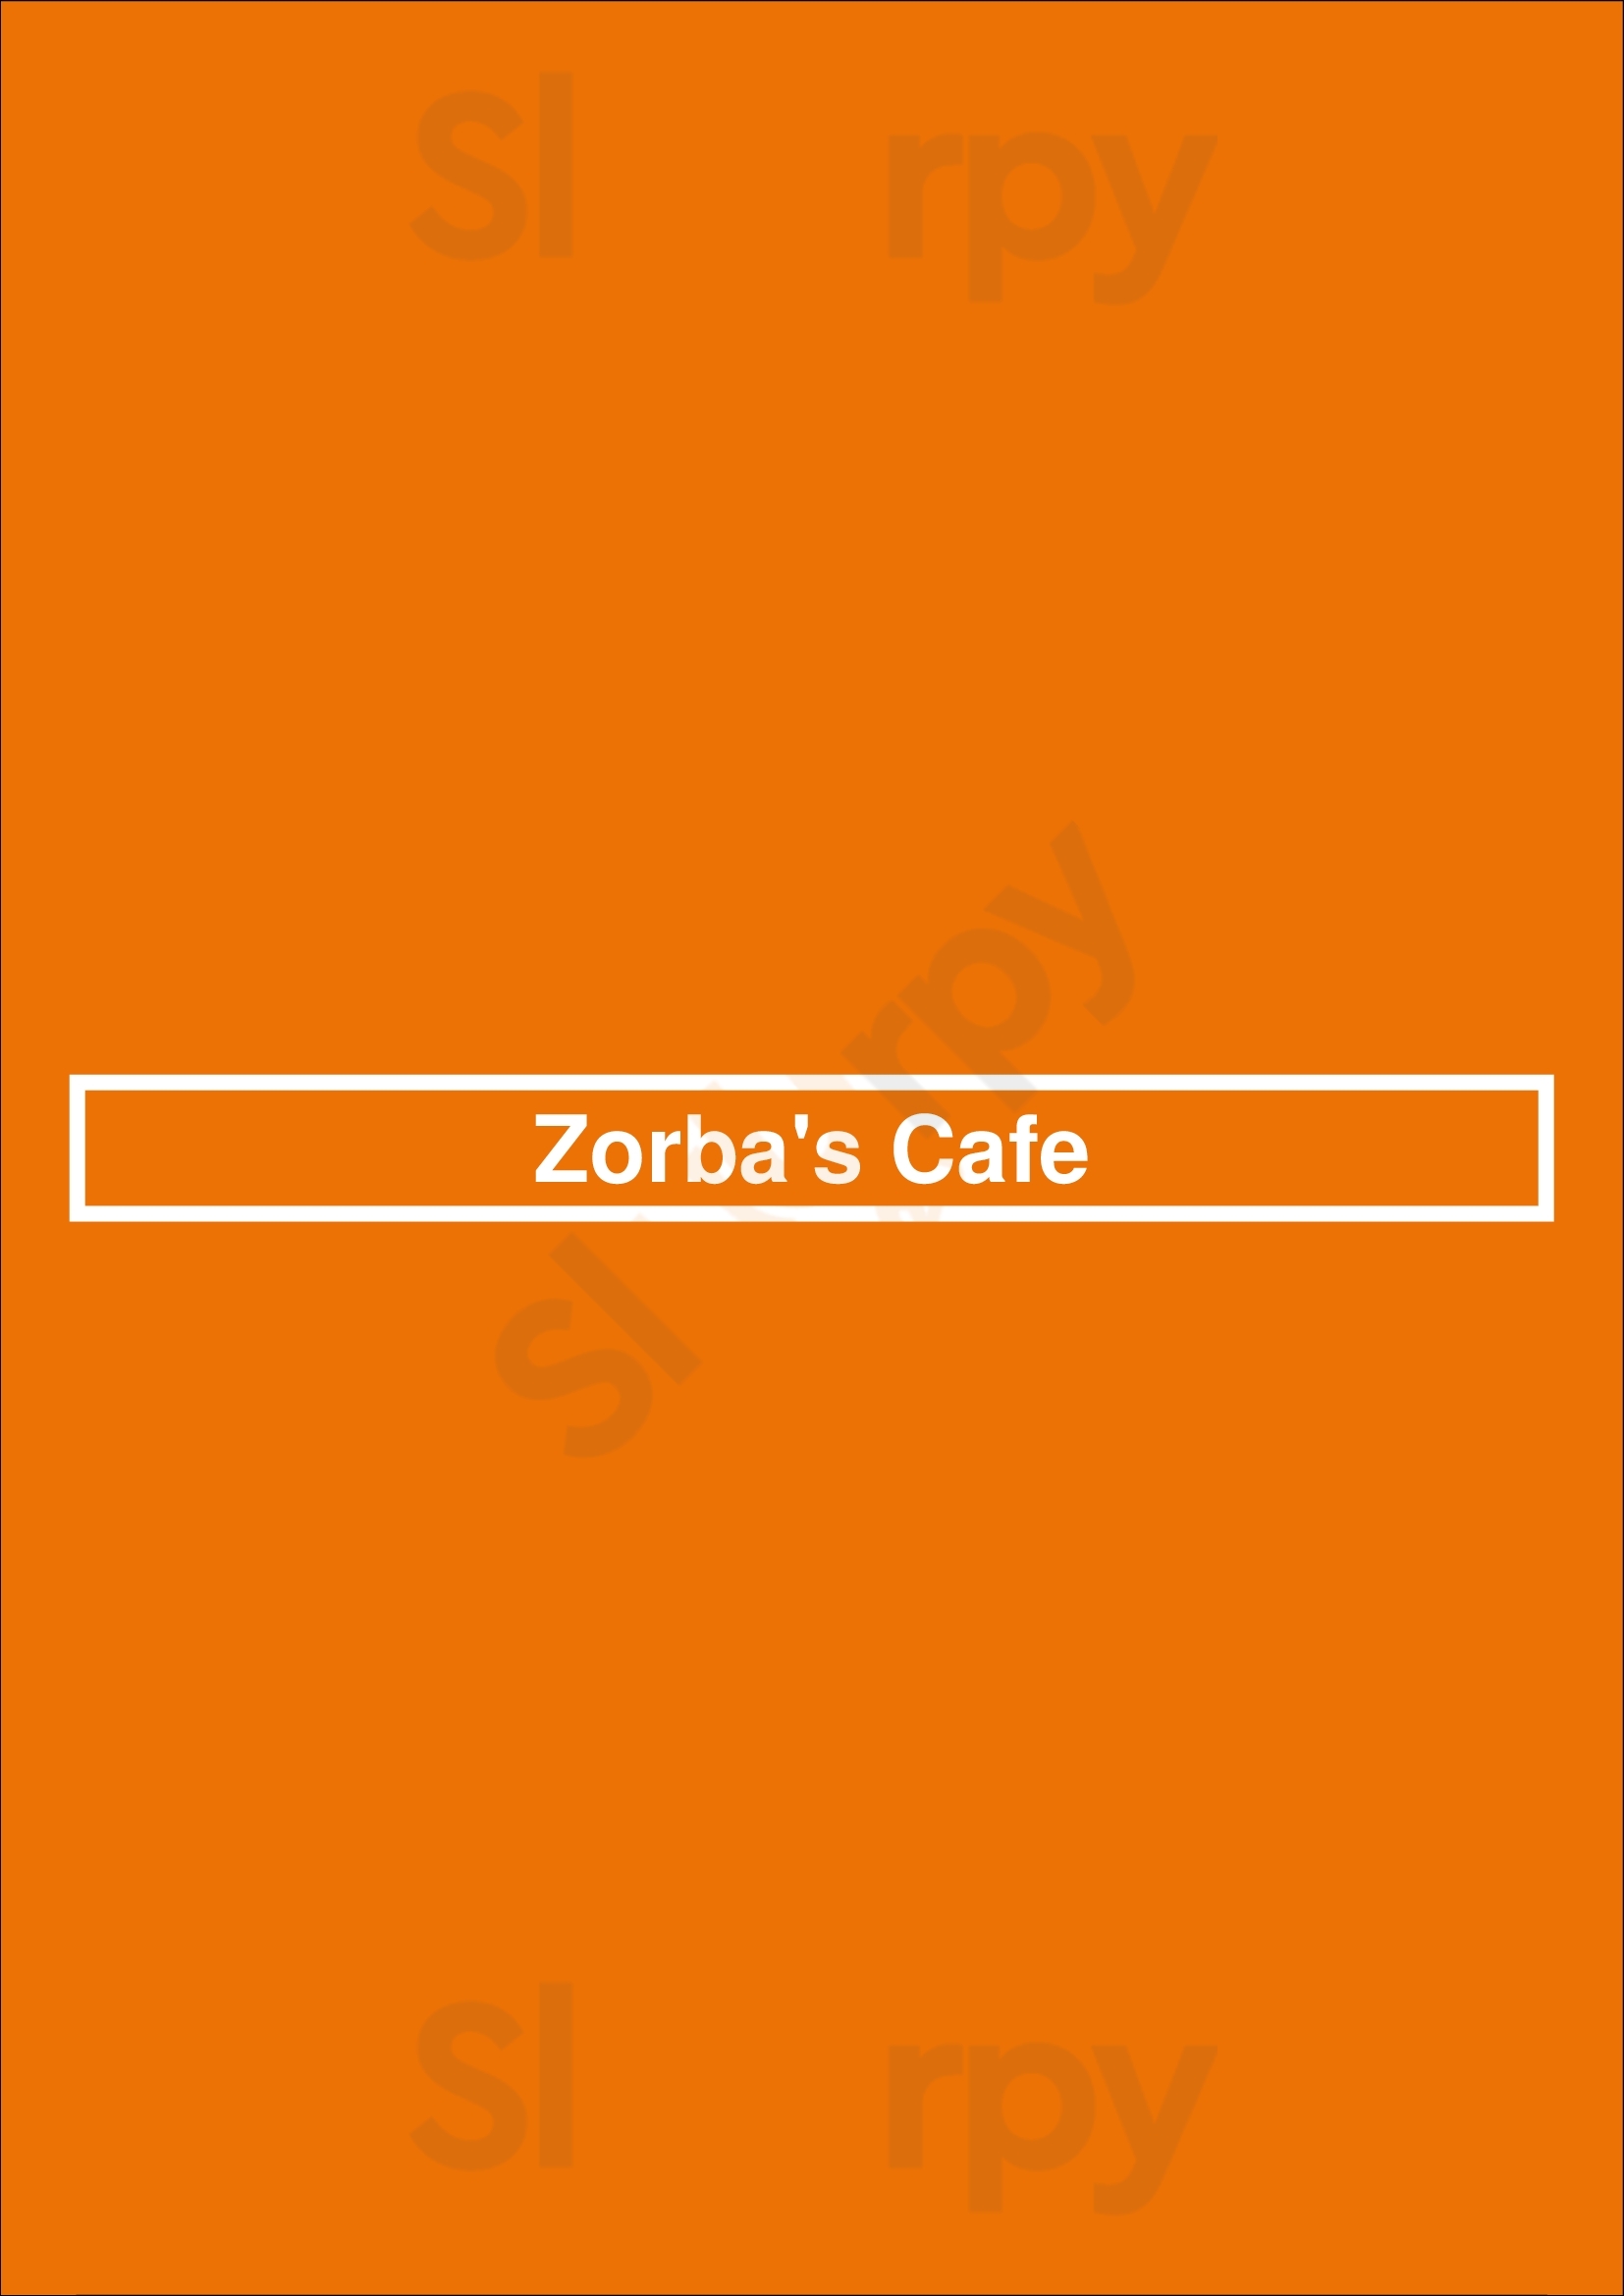 Zorba's Cafe Washington DC Menu - 1